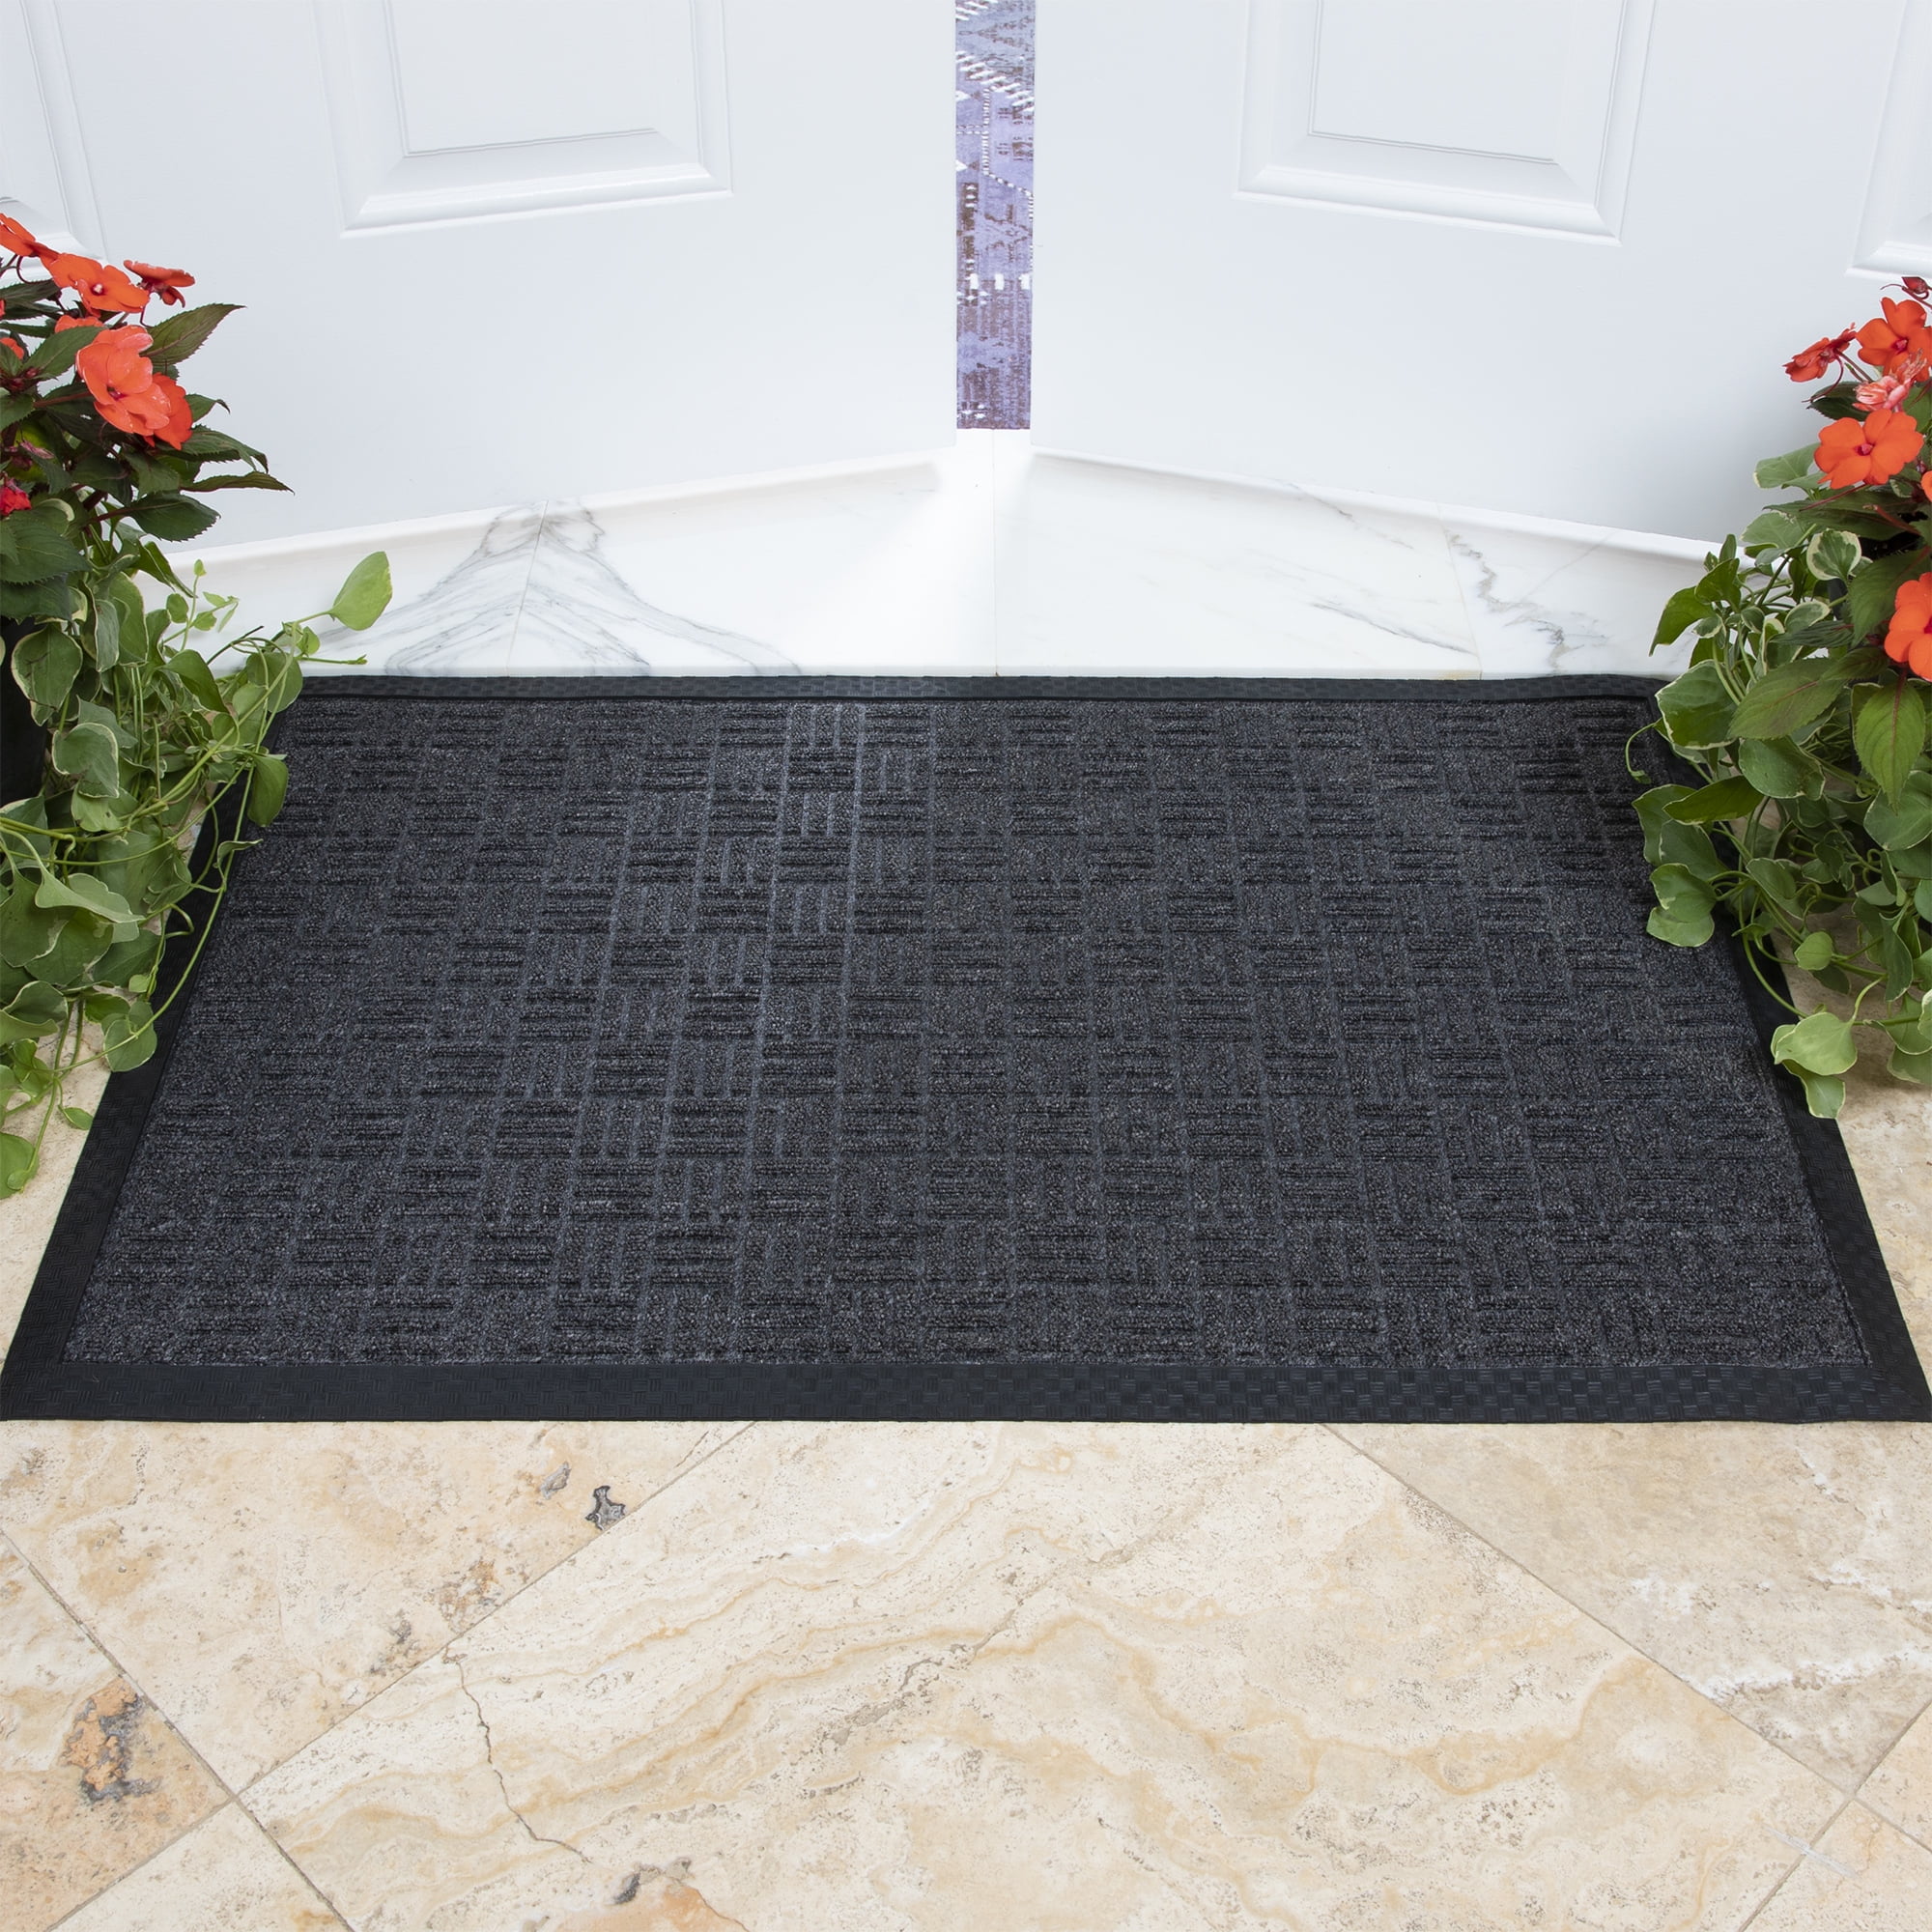 Kaluns Solid Front Doormat, Super Absorbent. 24 in X 36 in (Black